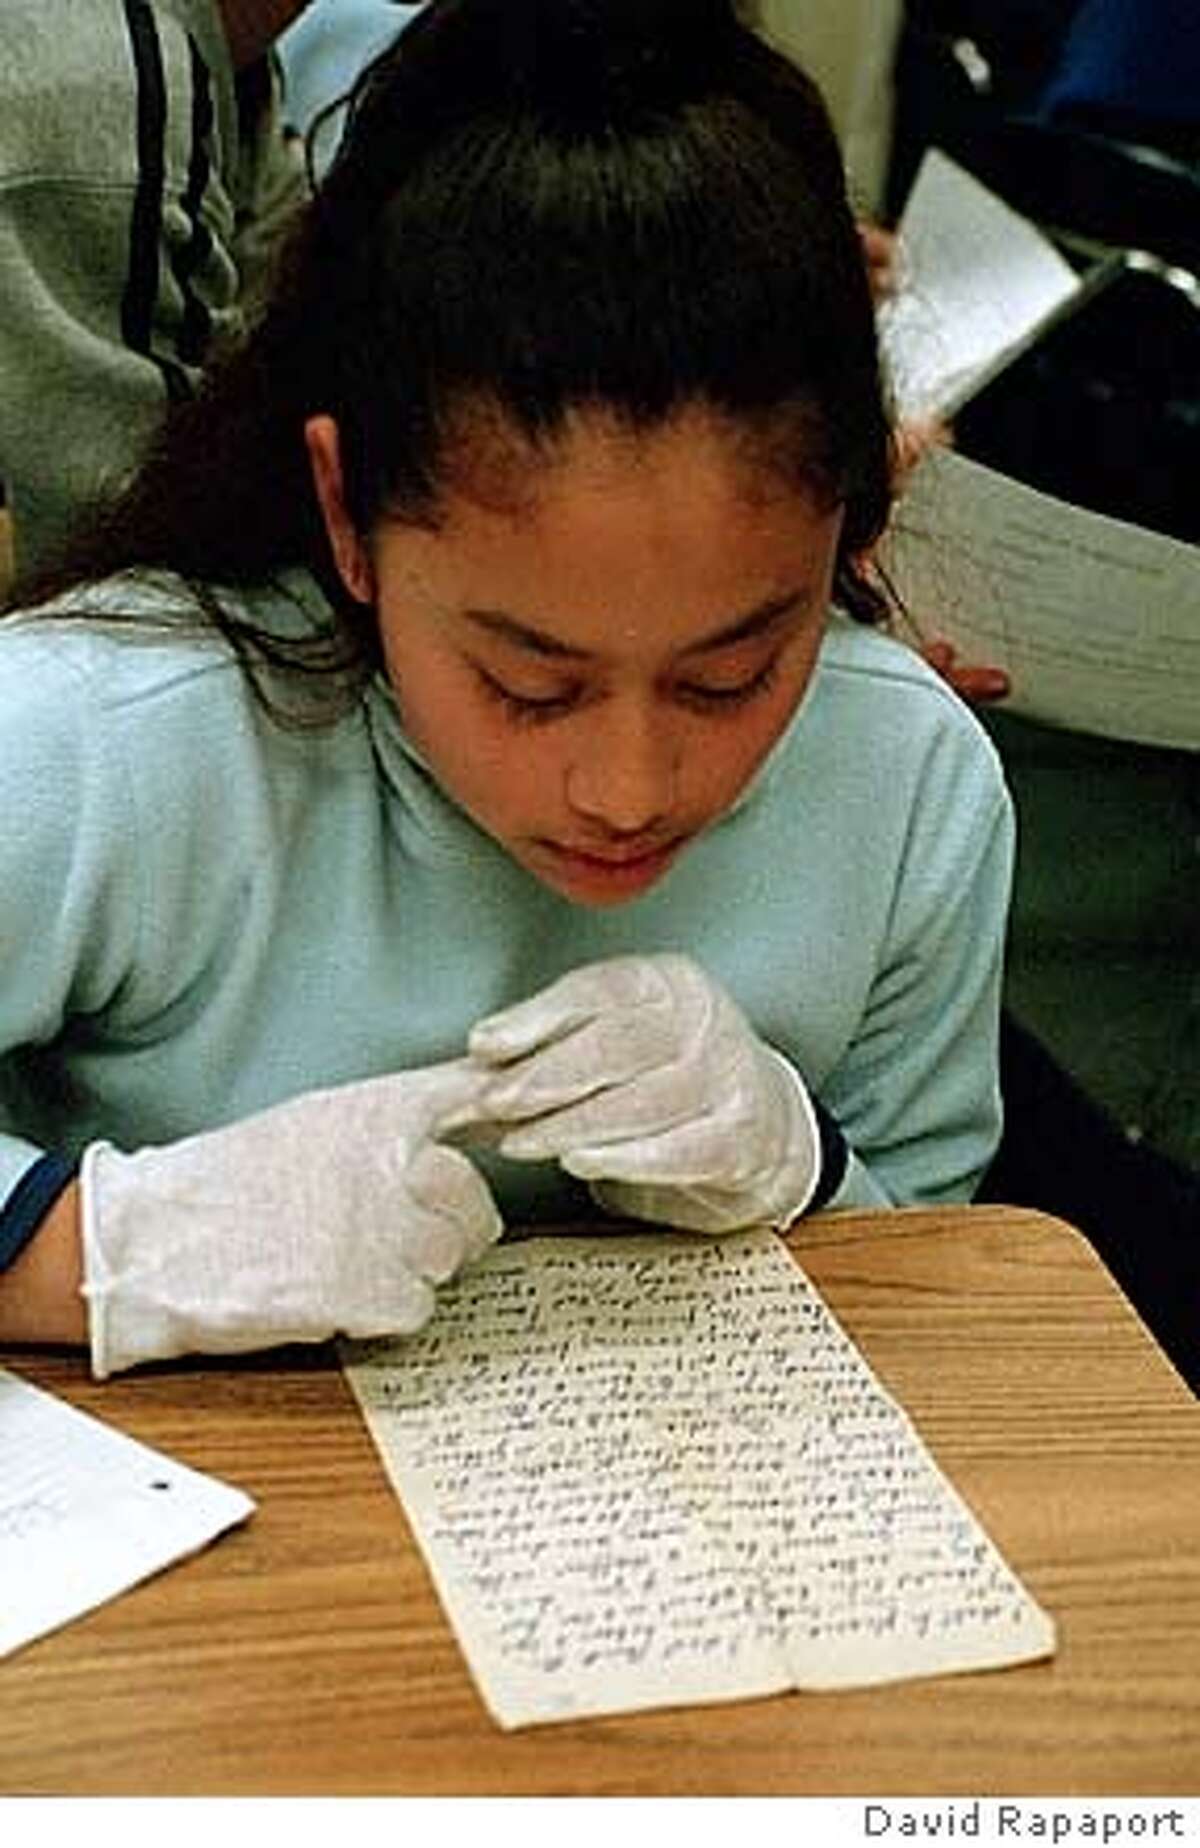 Daisy Aguilar examines one of the Julius Deetken documents. PHOTO CREDIT: DAVID RAPAPORT